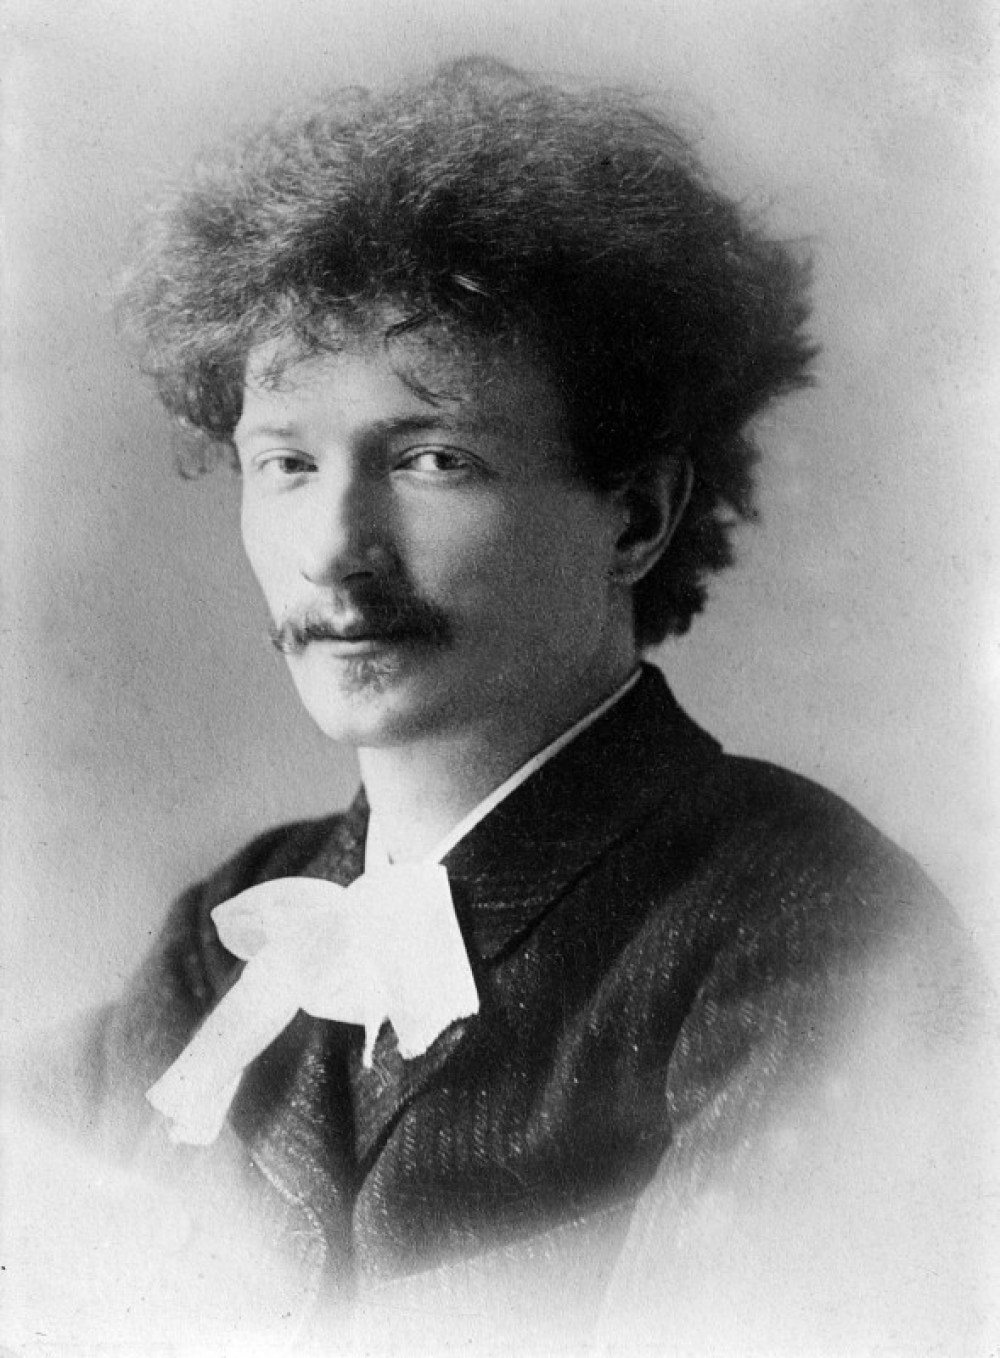 Ignacy_Jan_Paderewski_1860-1941.jpg